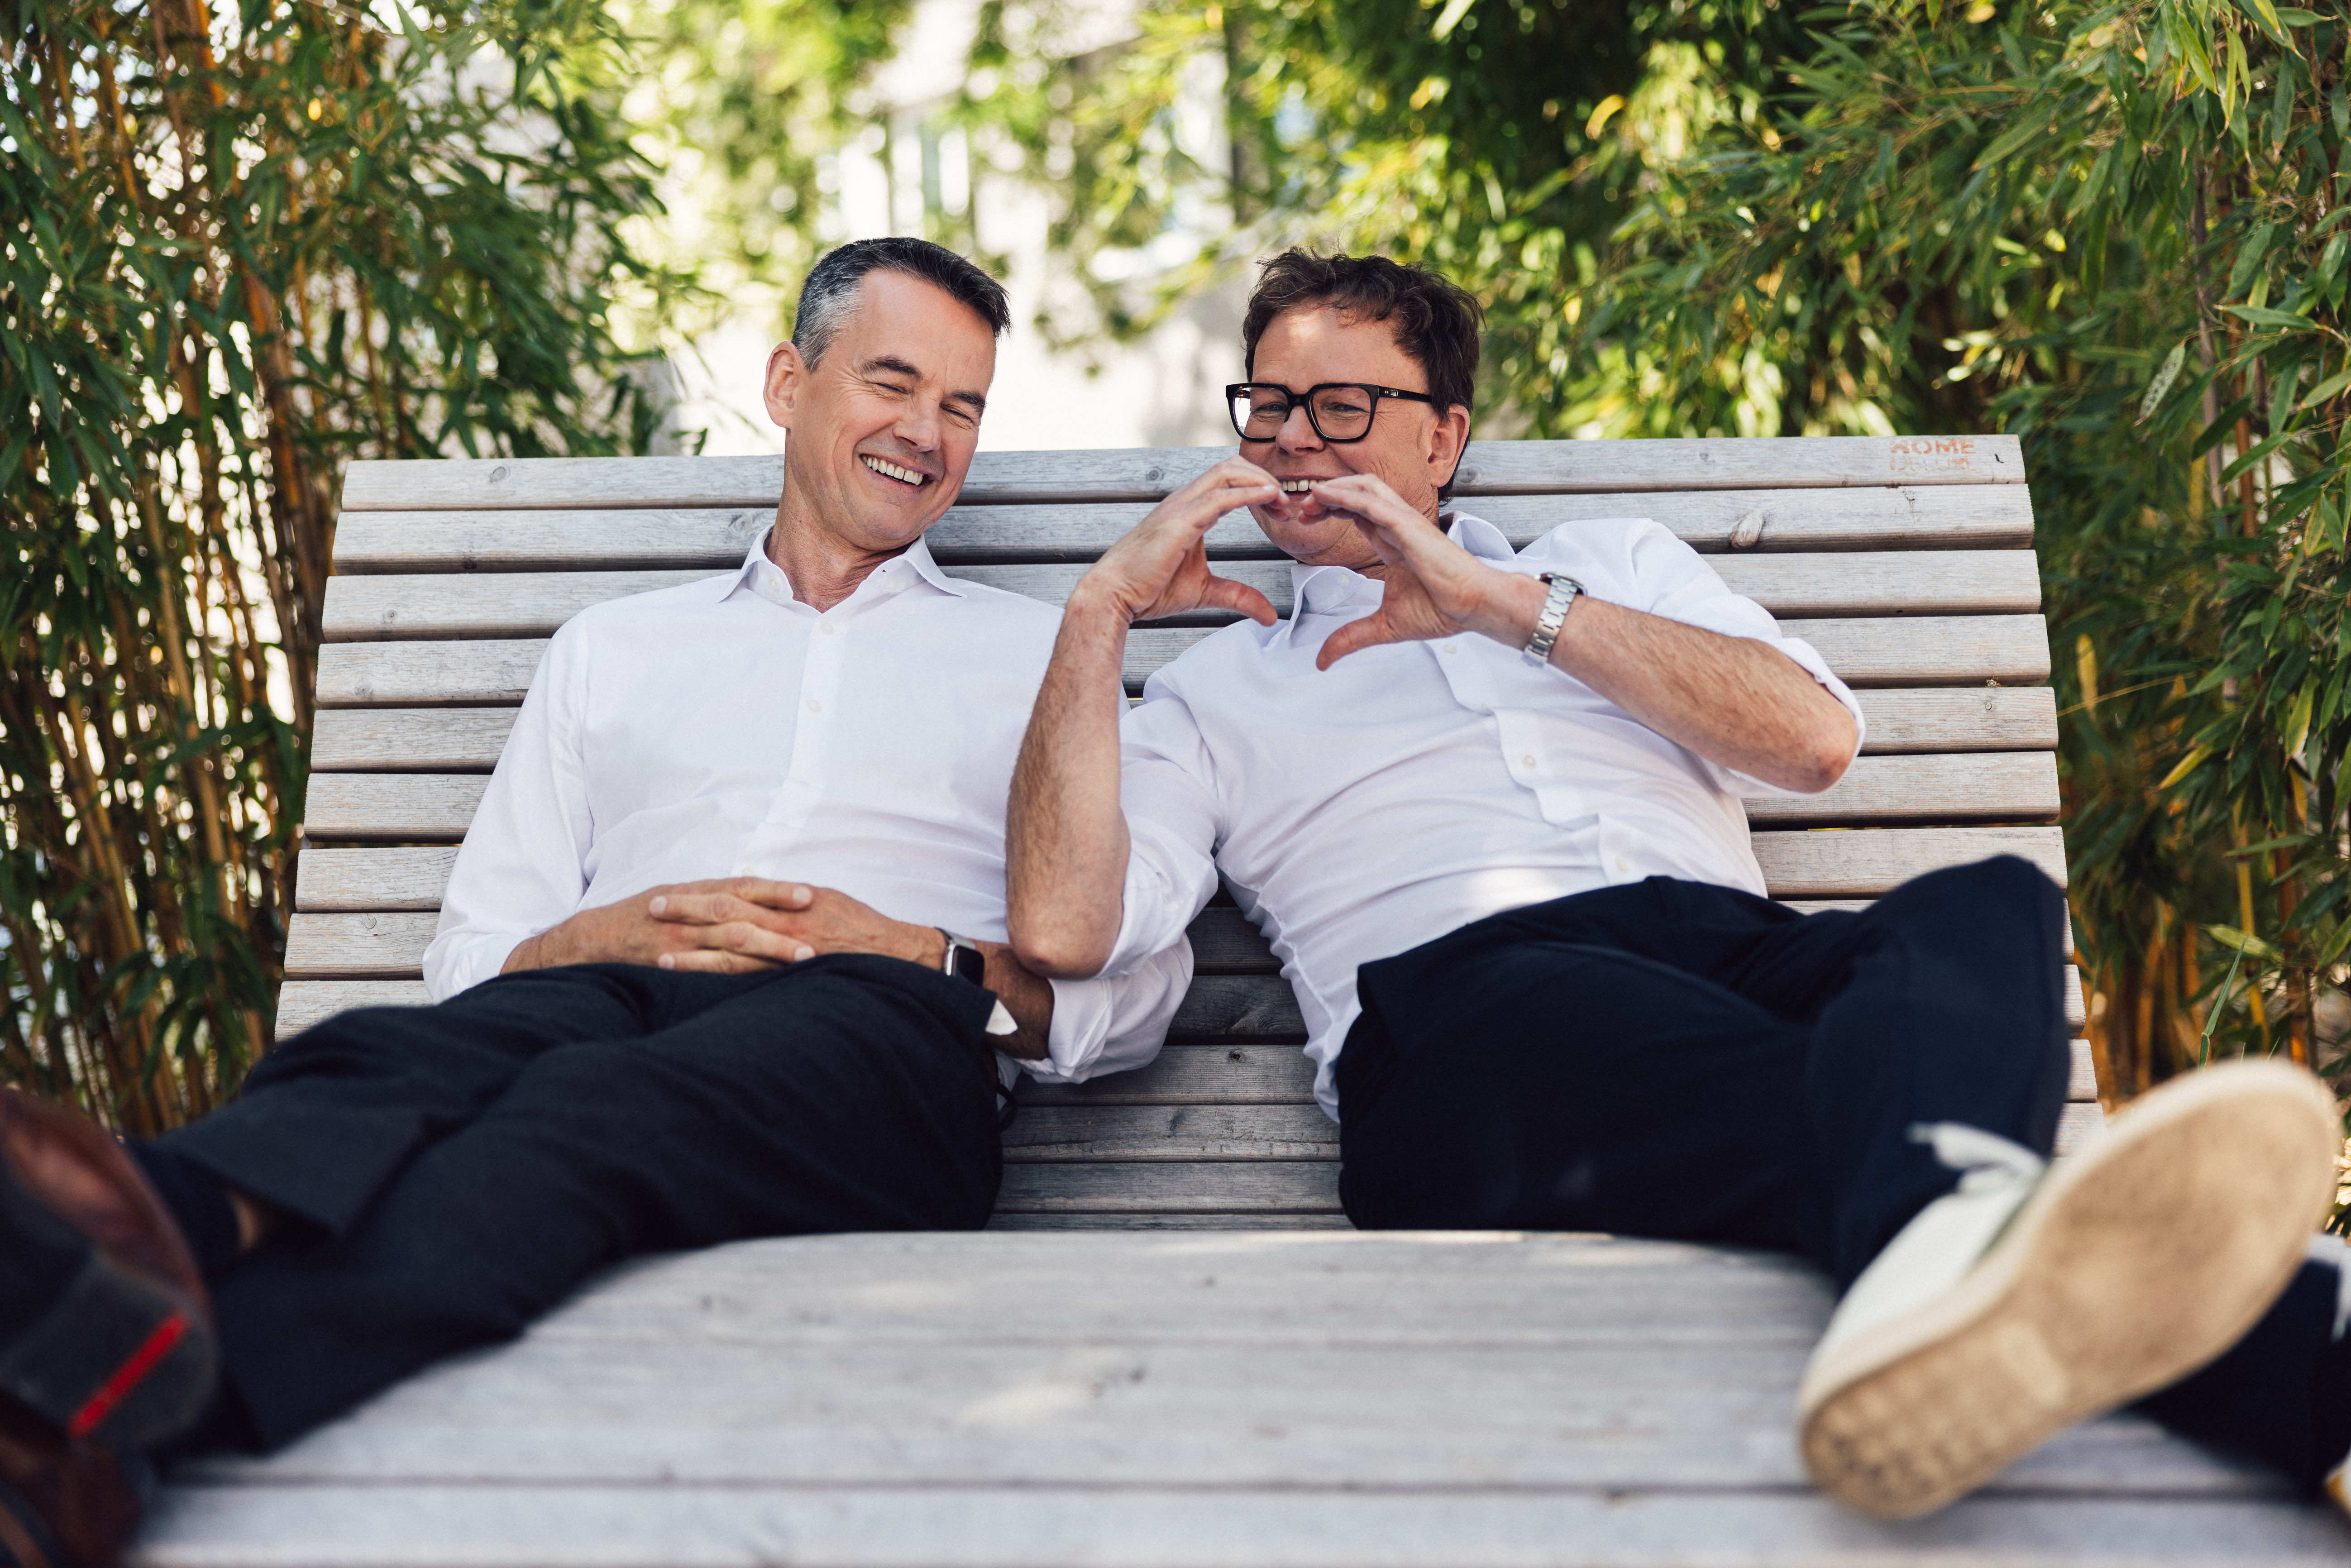 Michael and Florian Schmidmer lying on a bench in the noris garden nuremberg